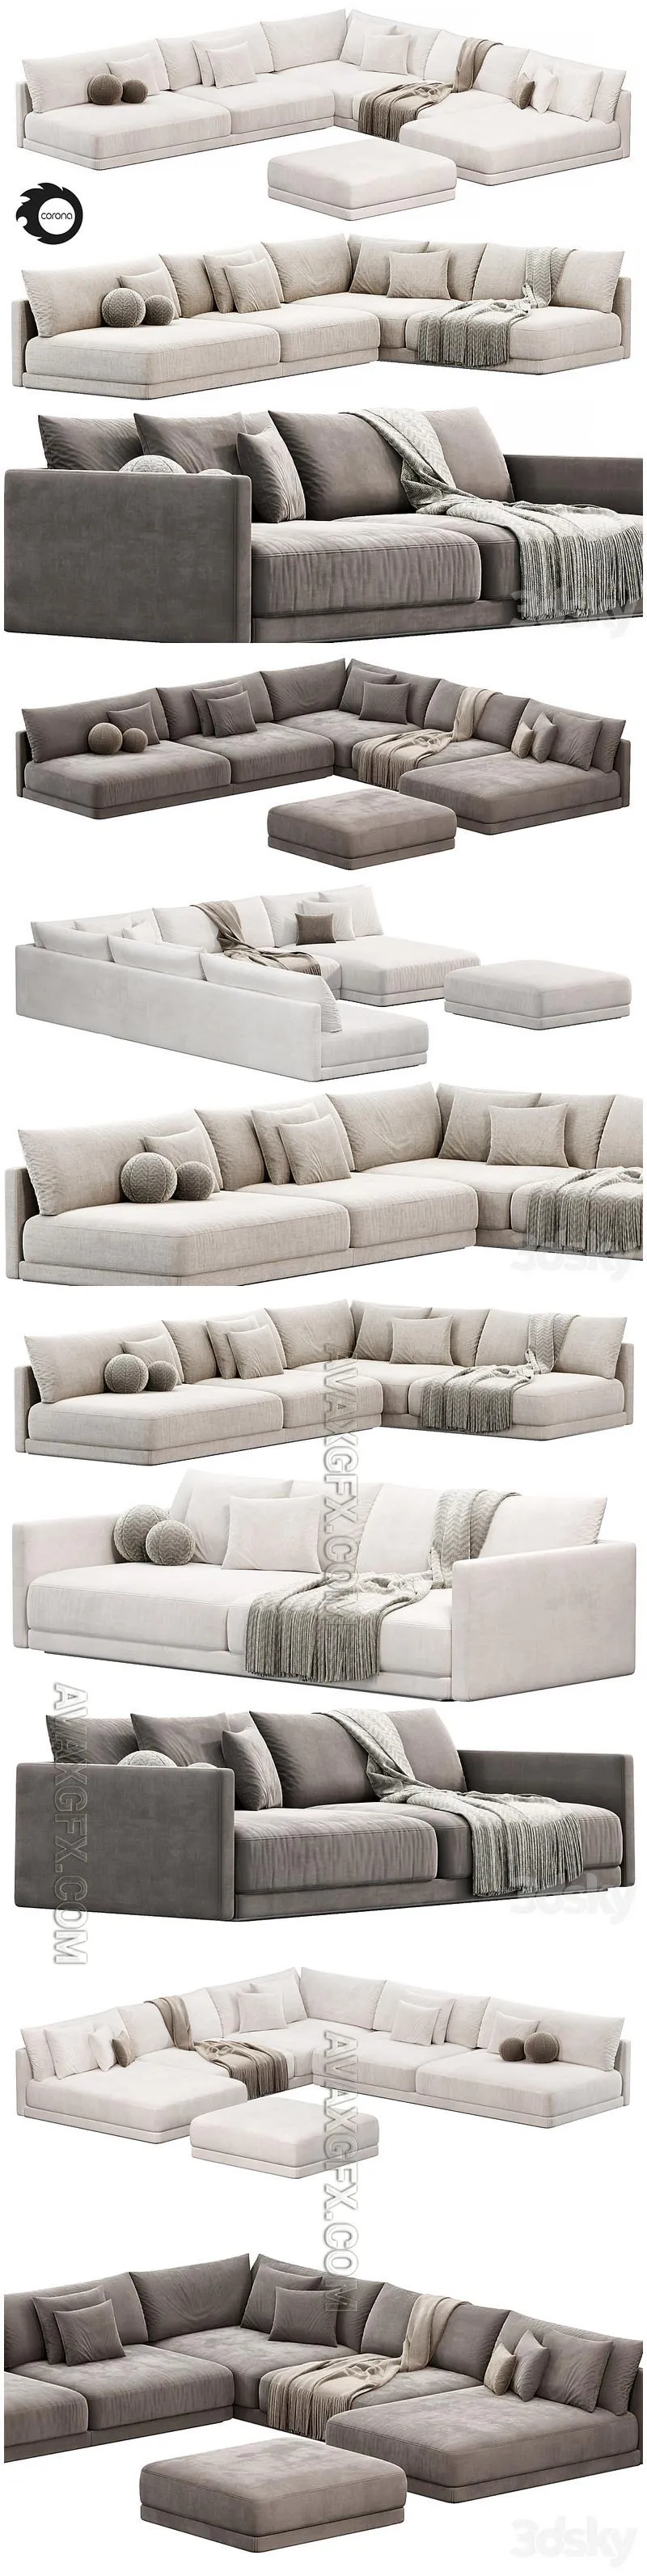 KATARINA Modular System Sofa By Blanche, sofas - 3D Model MAX